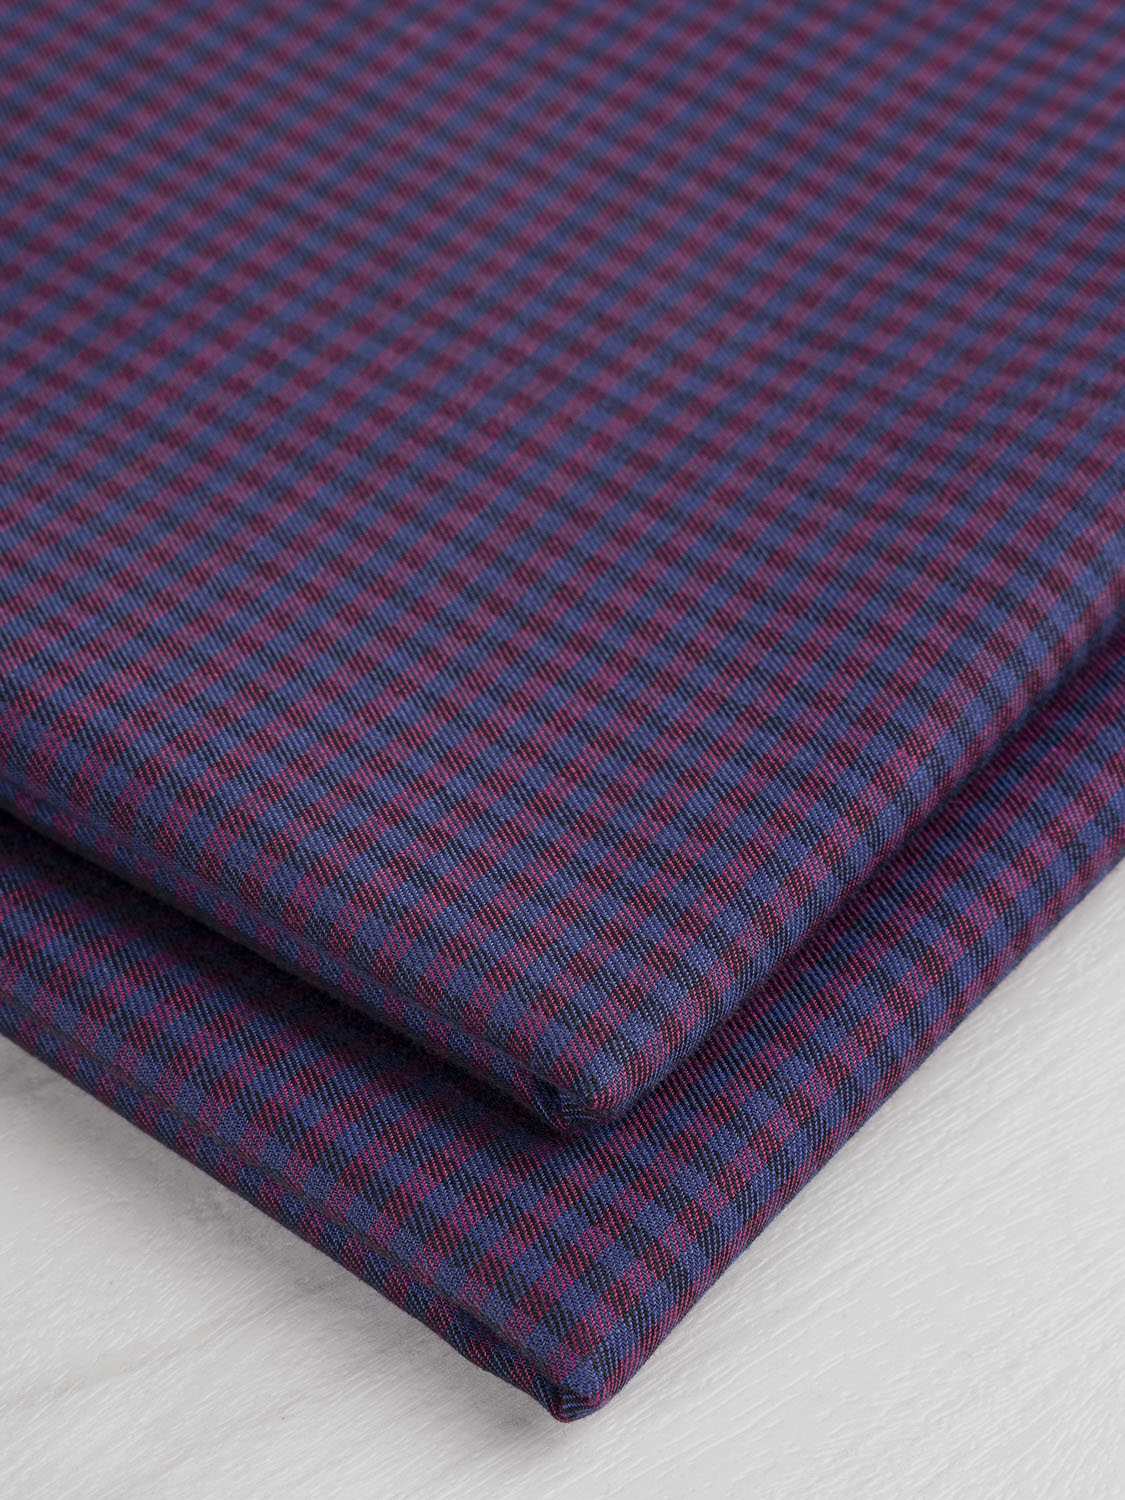 Yarn Dyed Twill Weave / Houndstooth / Garment Fabric